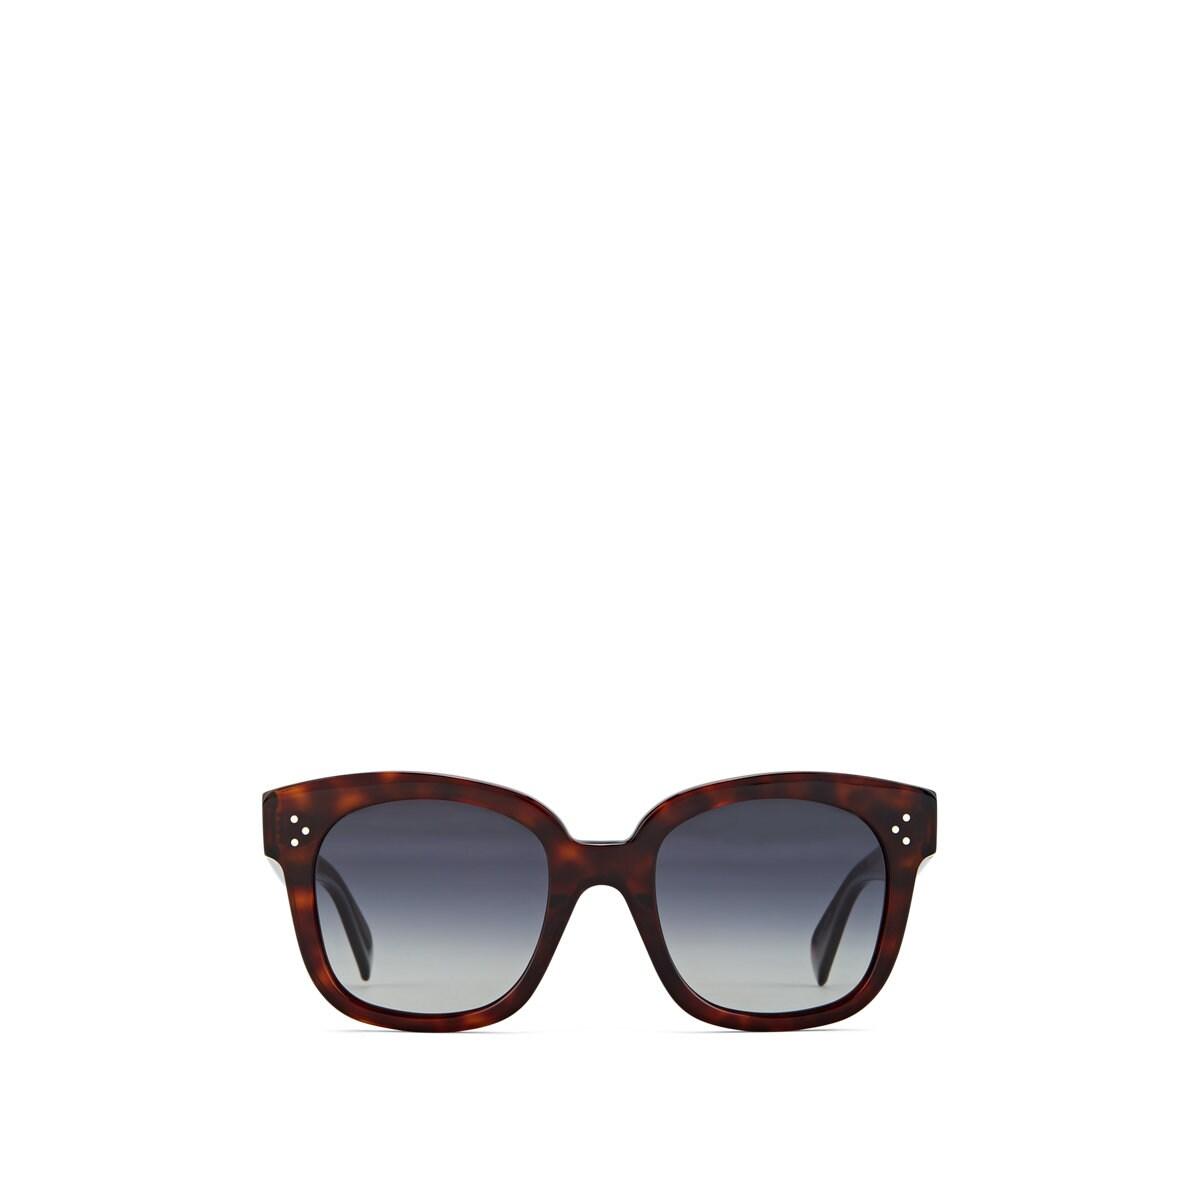 Céline Cl4002un Sunglasses in Brown - Lyst